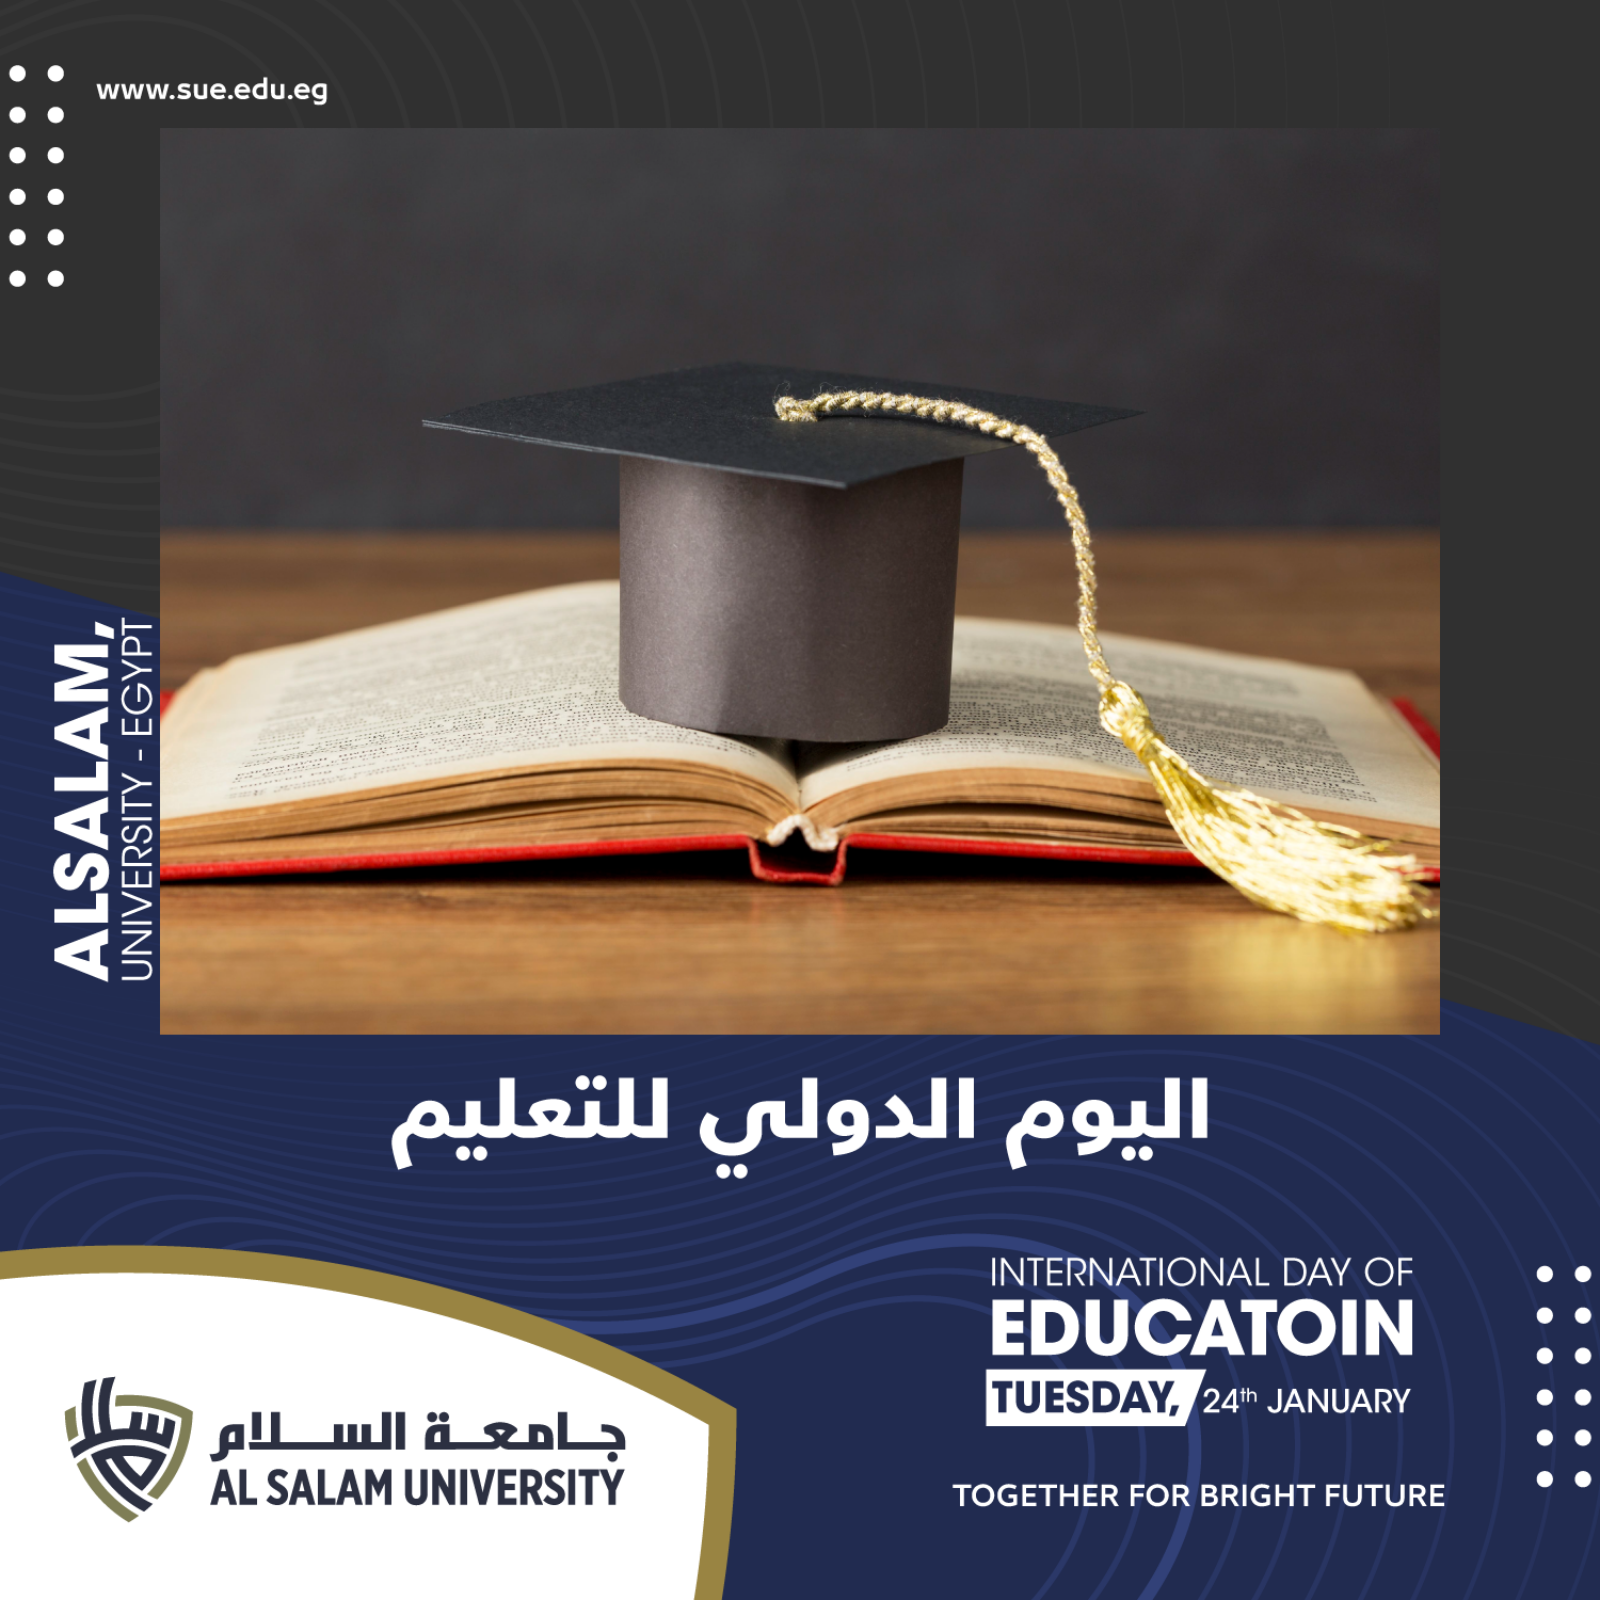 Al Salam University in Egypt (SUE) is a private university in the heart of Delta region